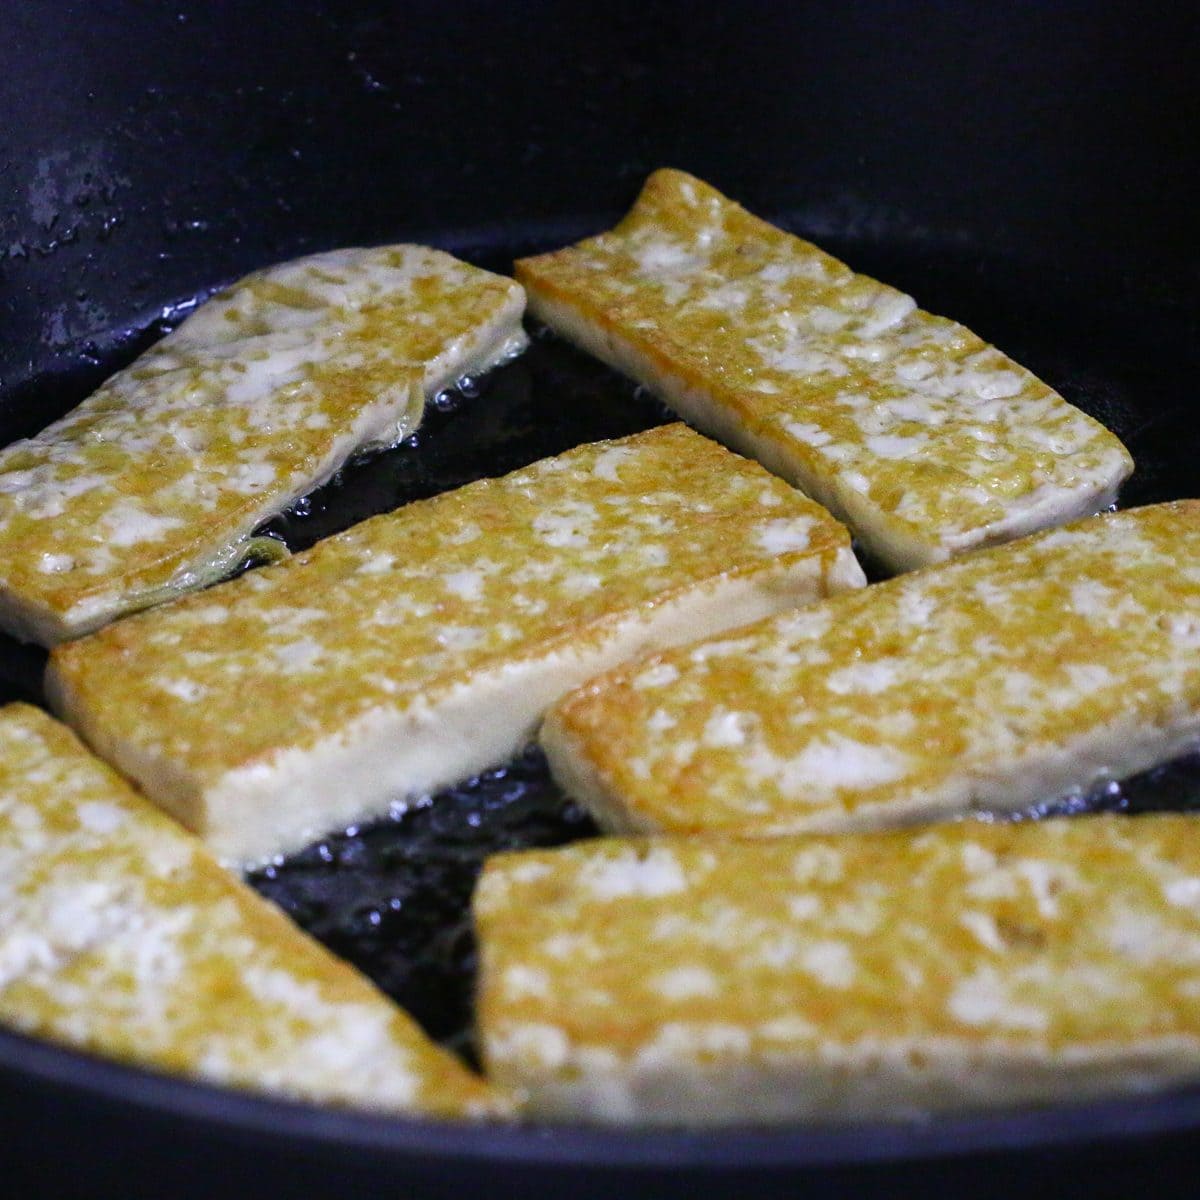 Pan fry the tofu